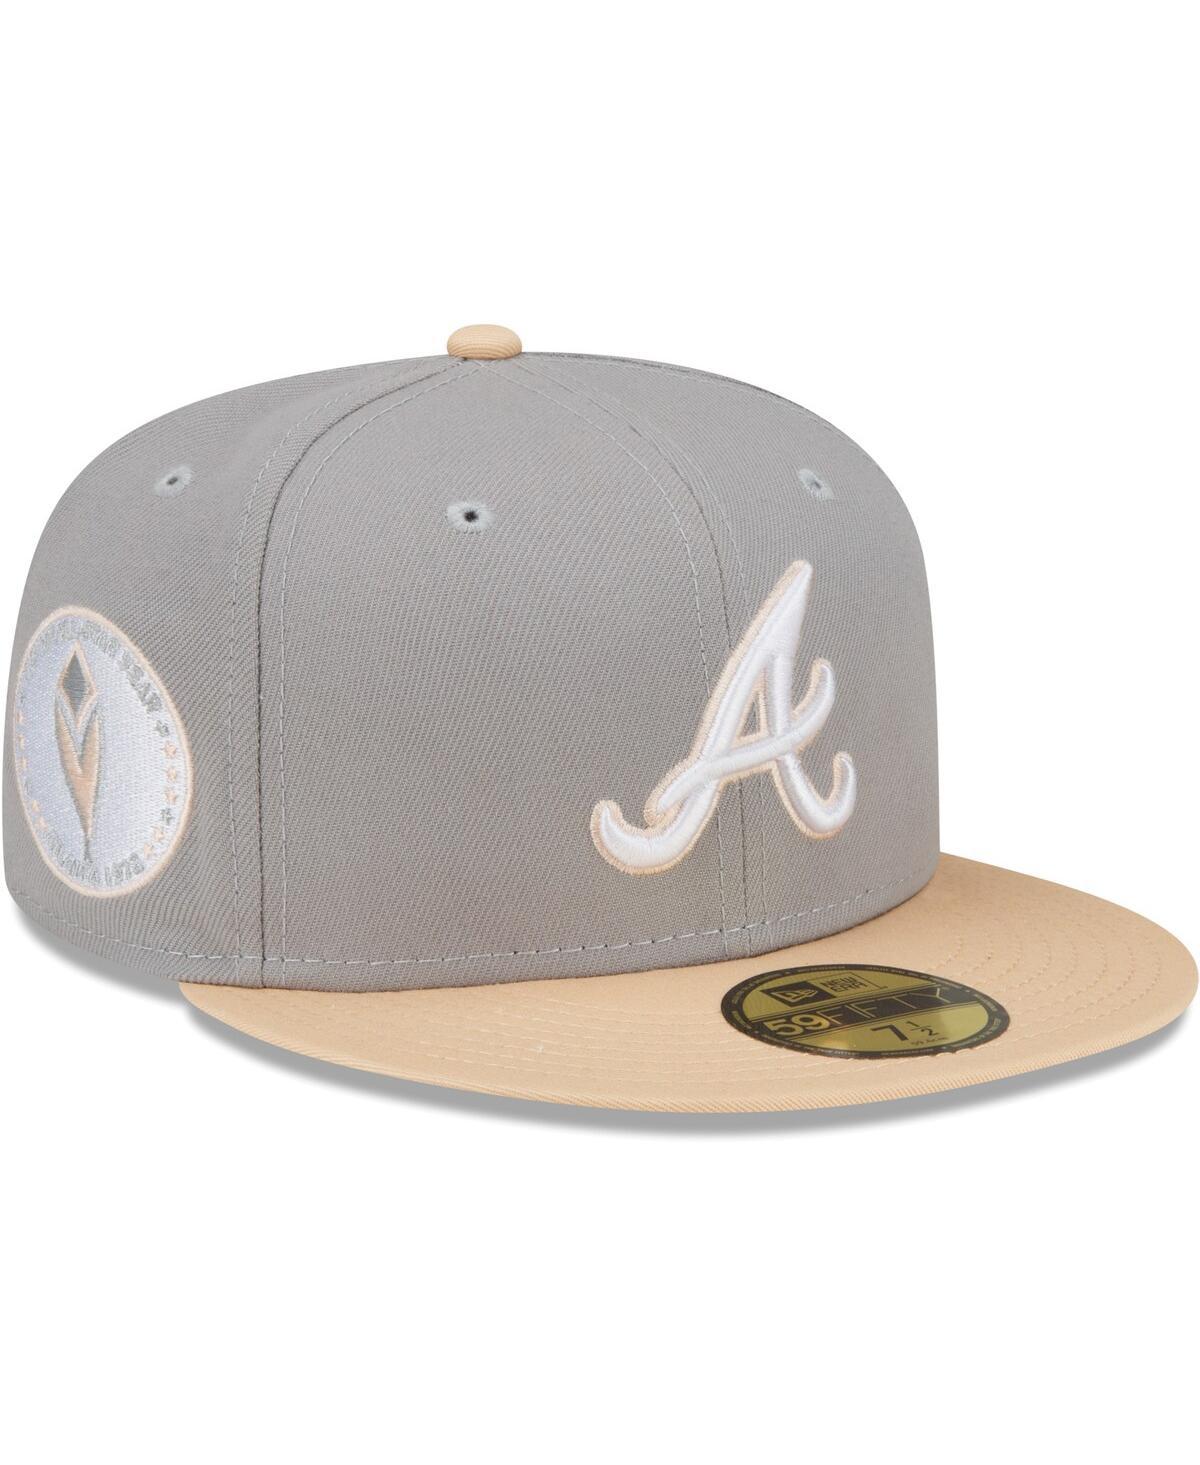 New Era / Men's Atlanta Braves Gray Distinct Bucket Hat